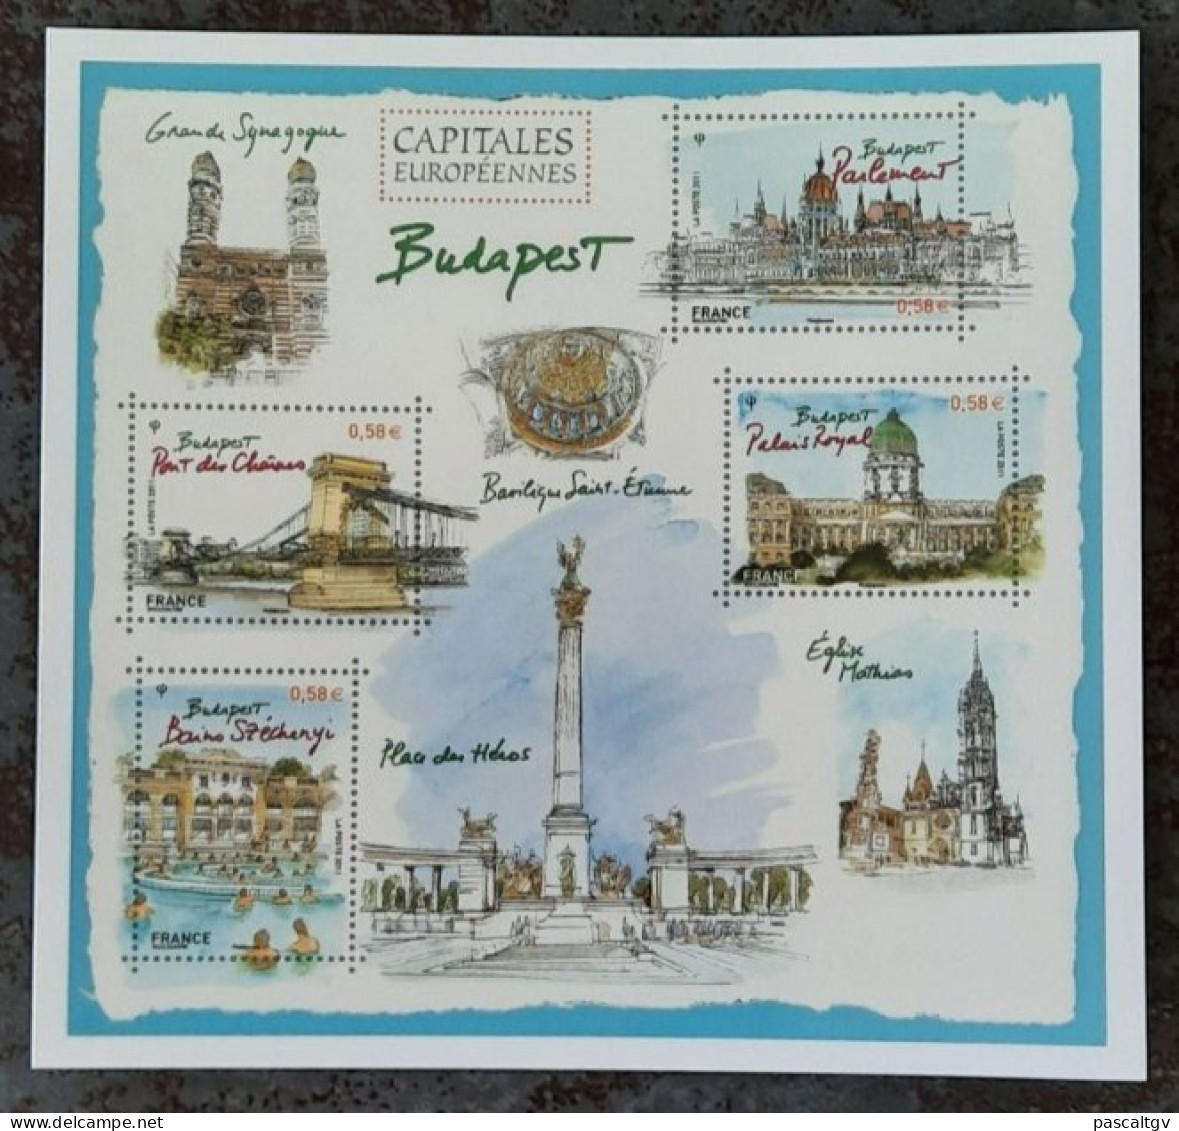 2011 - Entier Postal International - 20gr (1,96 Euro) - ** BUDAPEST Capitale Européenne ** - 4538 - LUXE - - Documenten Van De Post